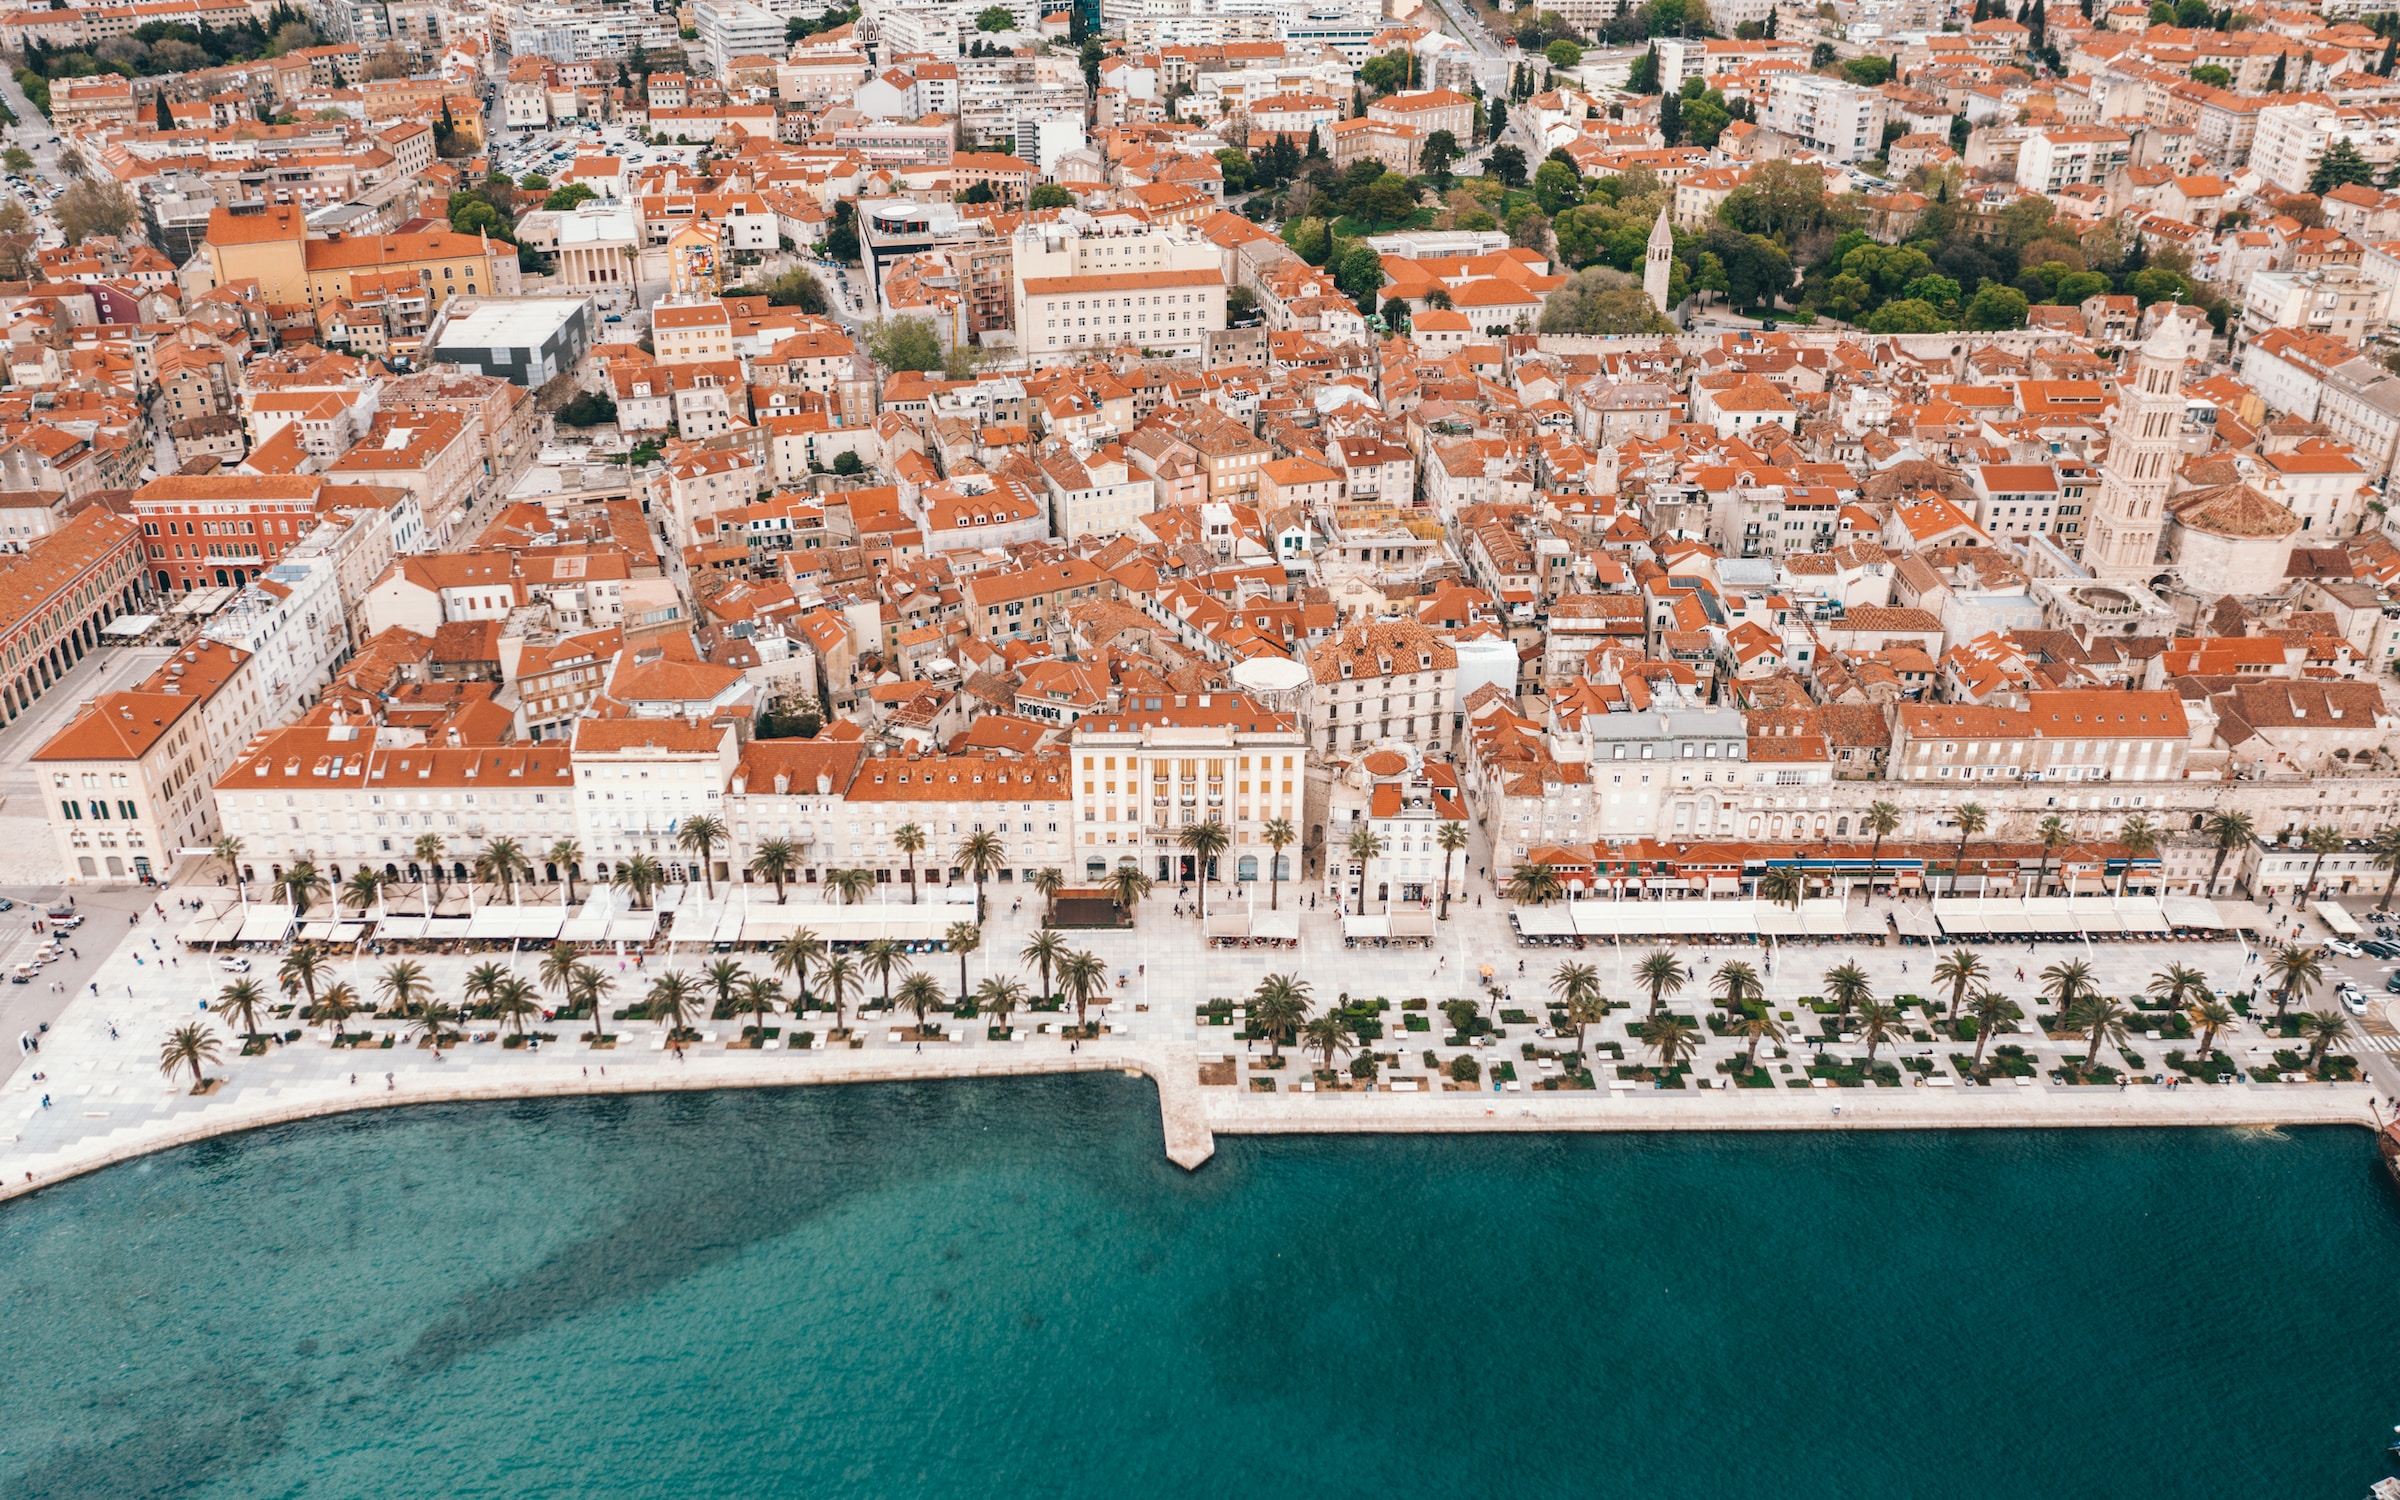 Day 10 Mostar – Transfer Day to Dubrovnik or Split (Croatia)